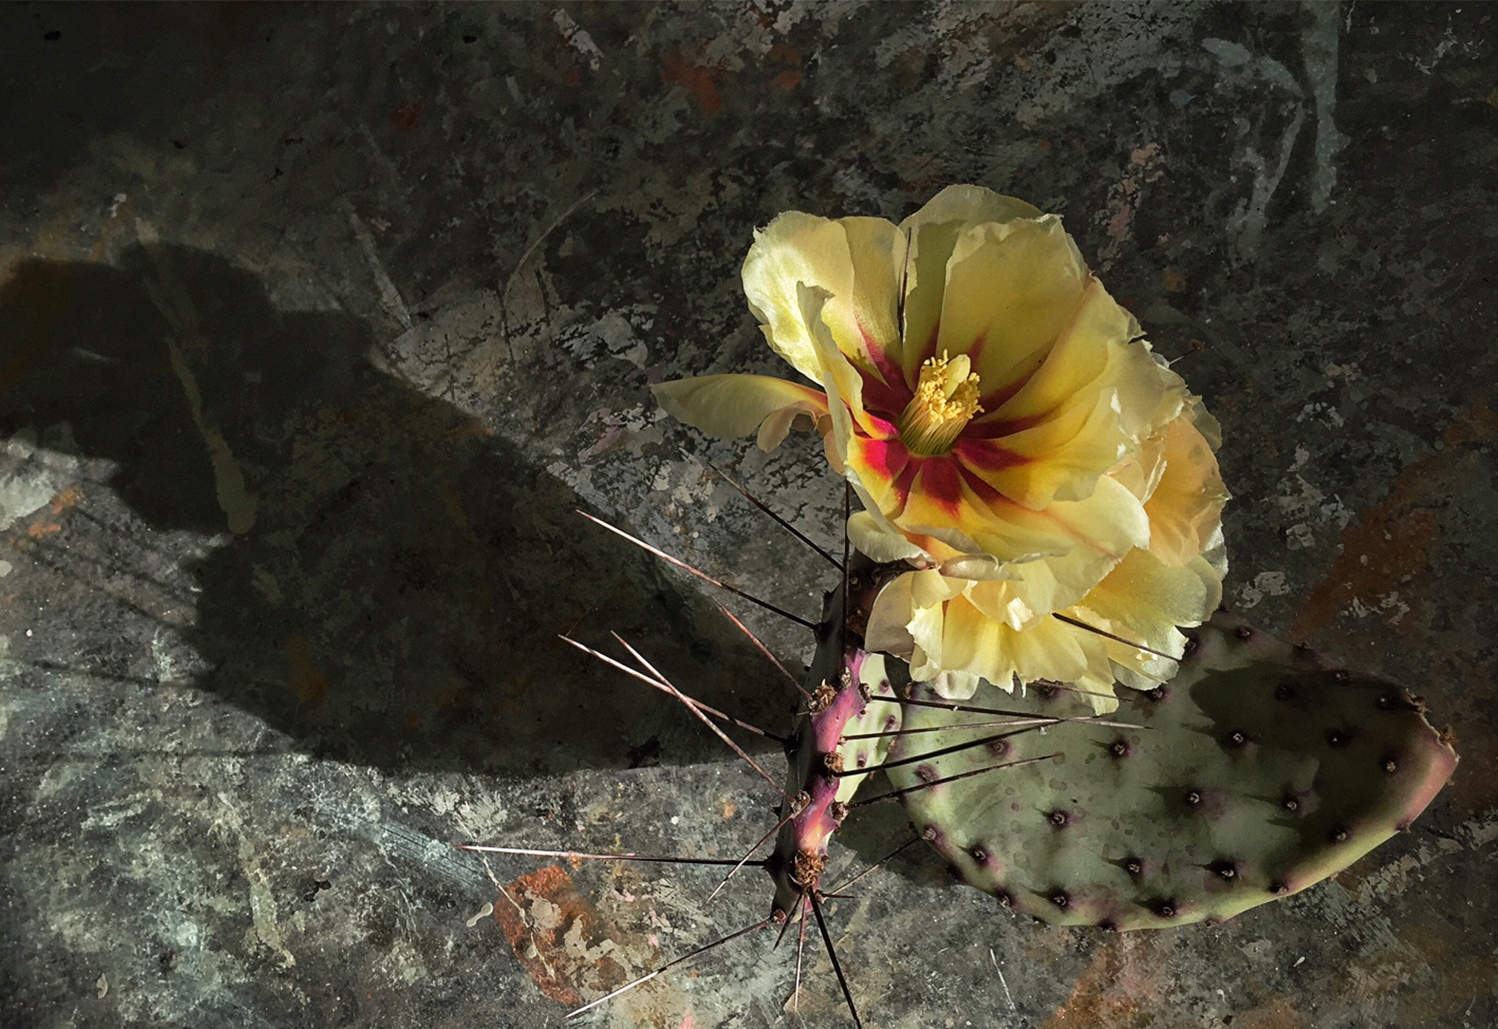 cactus-flower-table-web.jpg